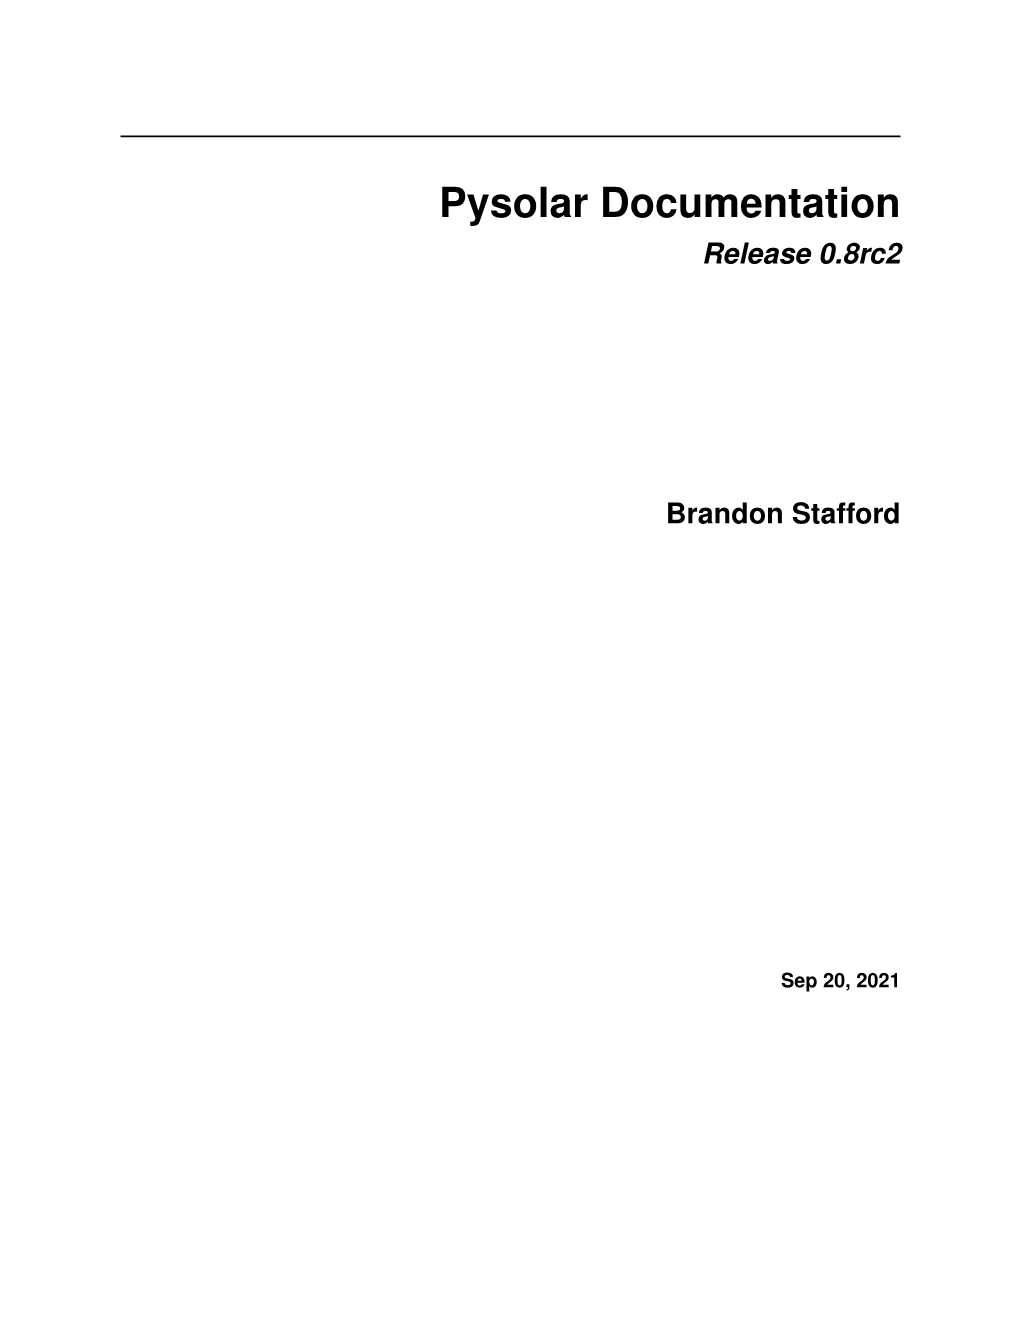 Pysolar Documentation Release 0.8Rc2